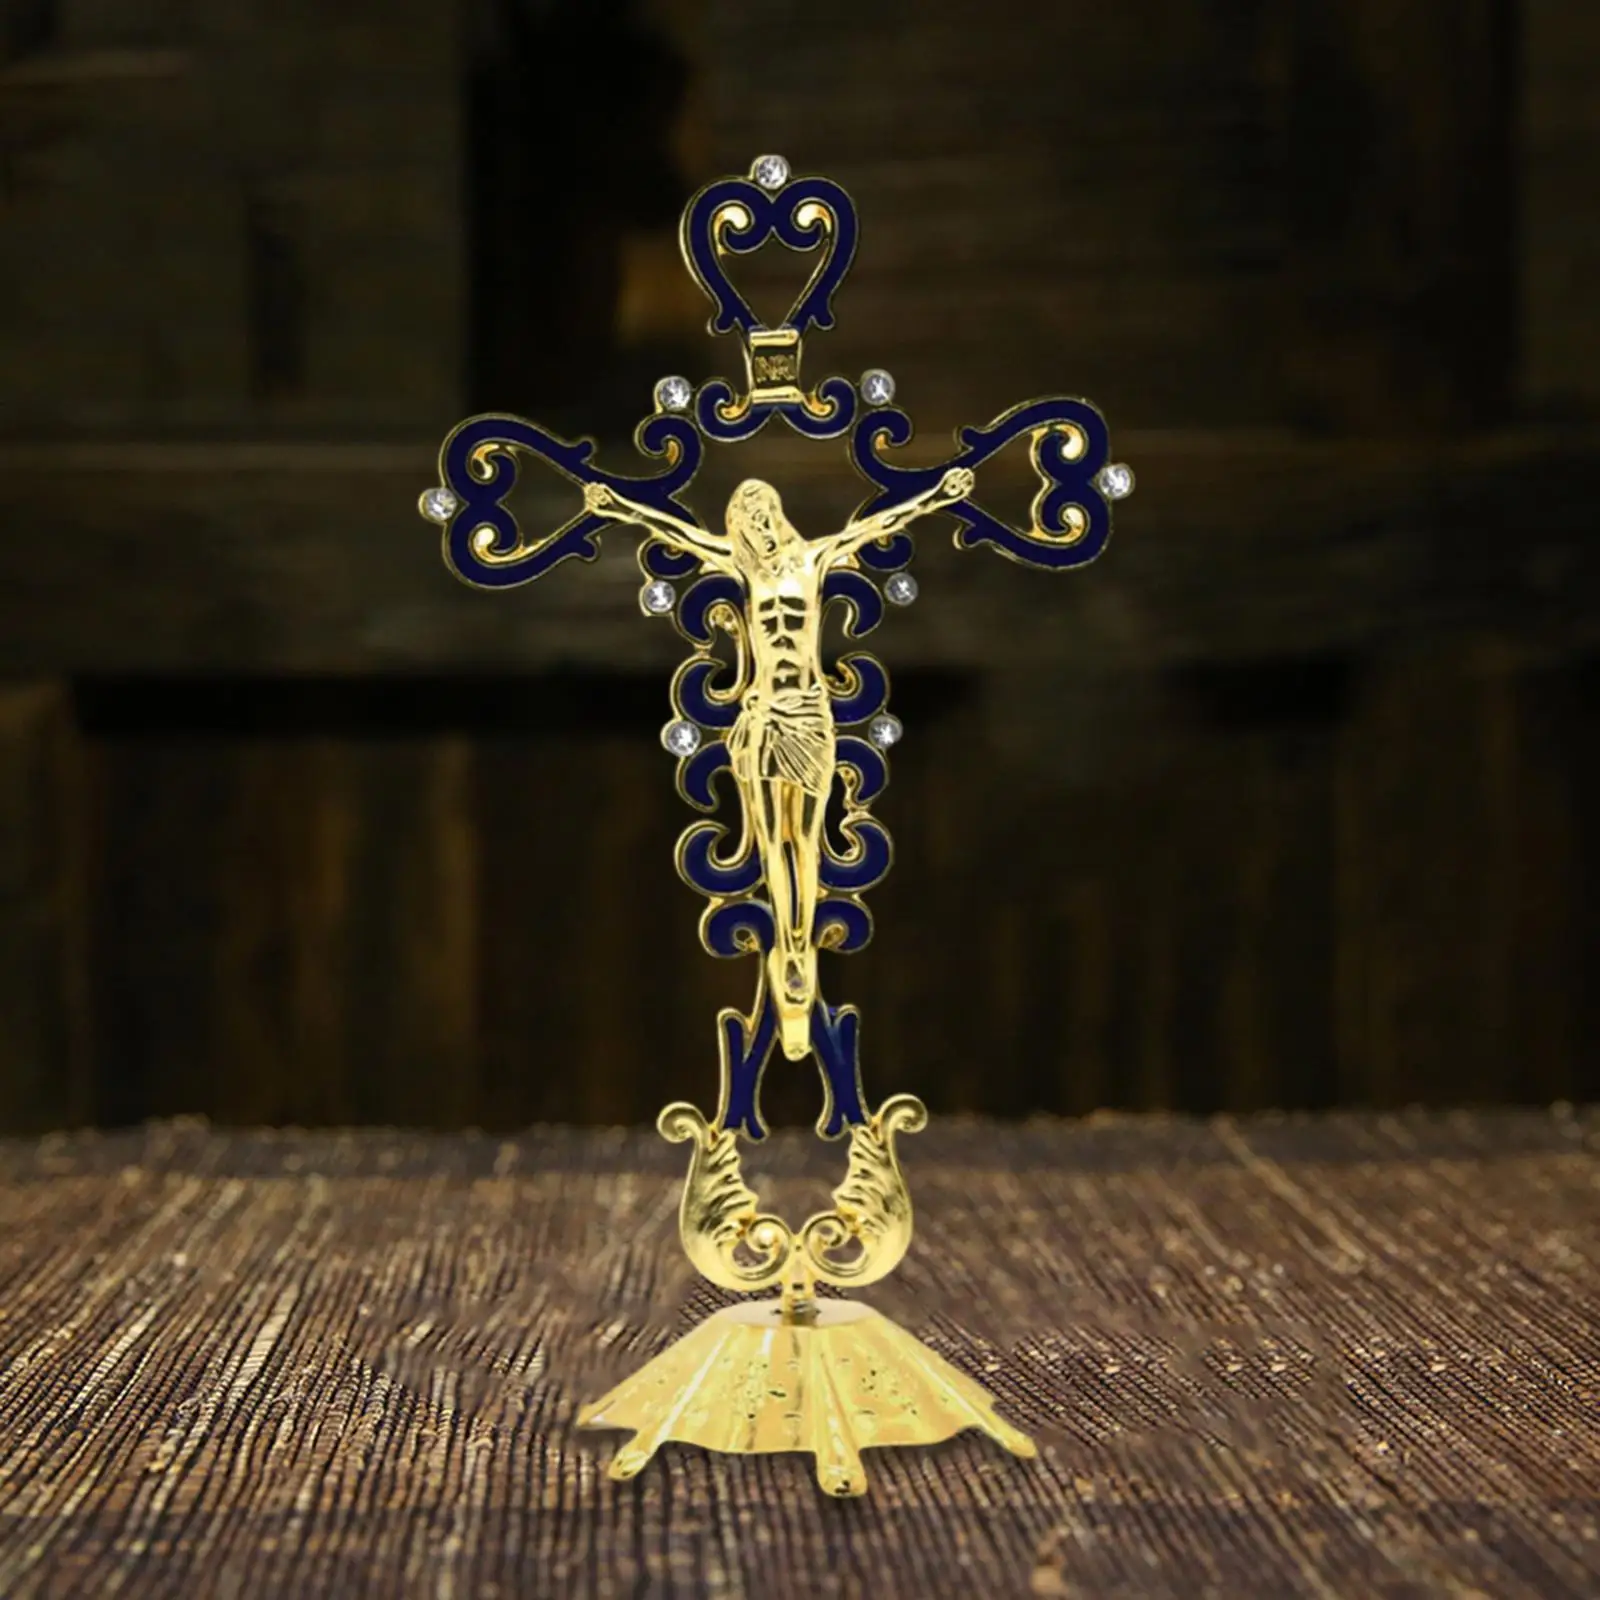 Religious Crucifix Figurine Jesus Cross Statue Ornament Crafts Sculpture Home Chapel Office Decor